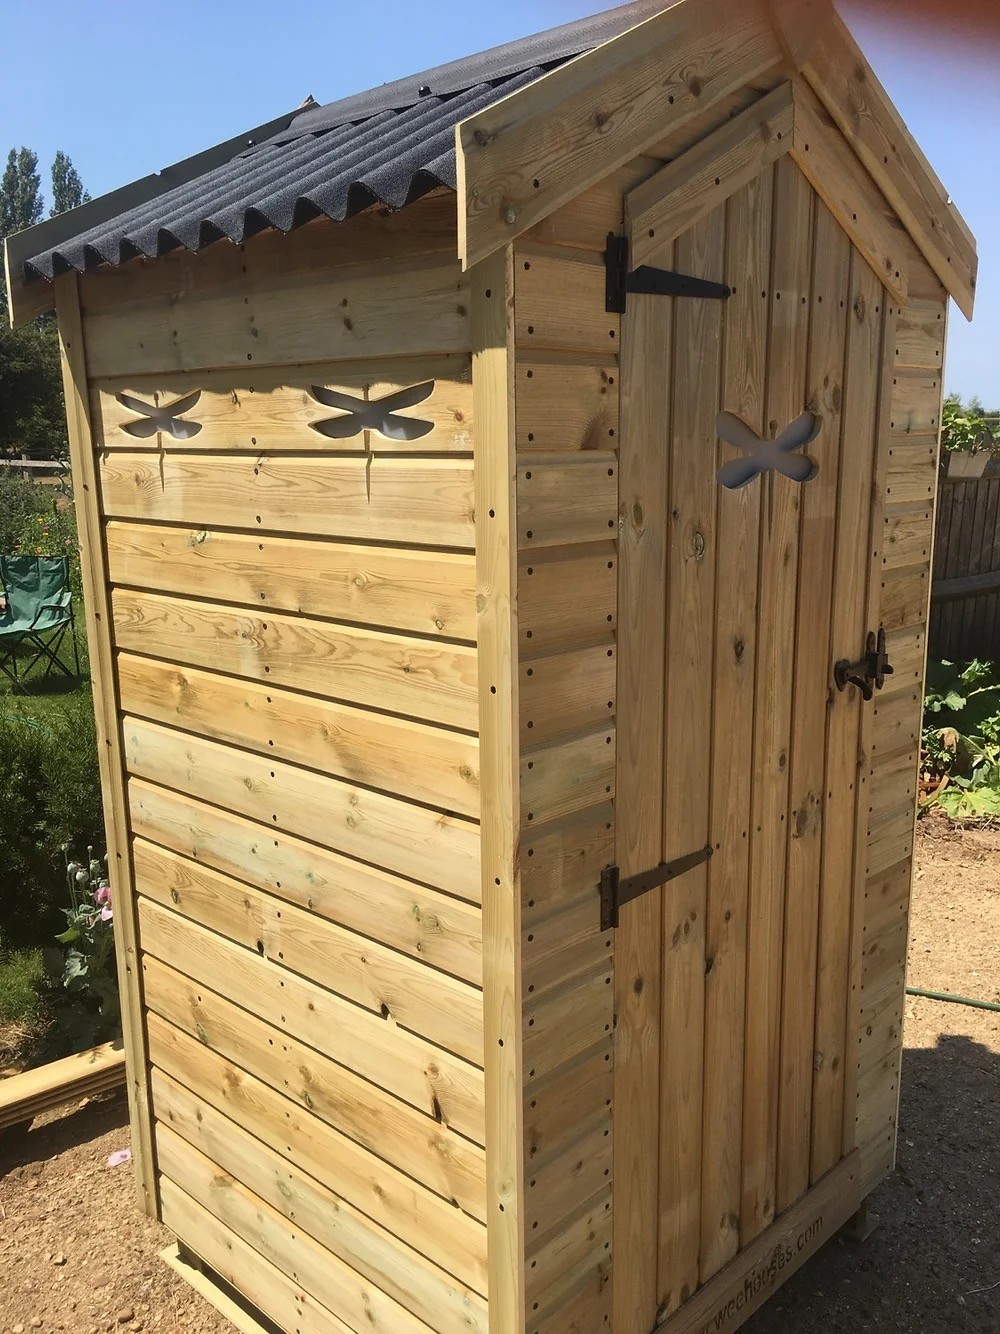 Off grid compost toilet, Hollyhocks Eco Retreat.